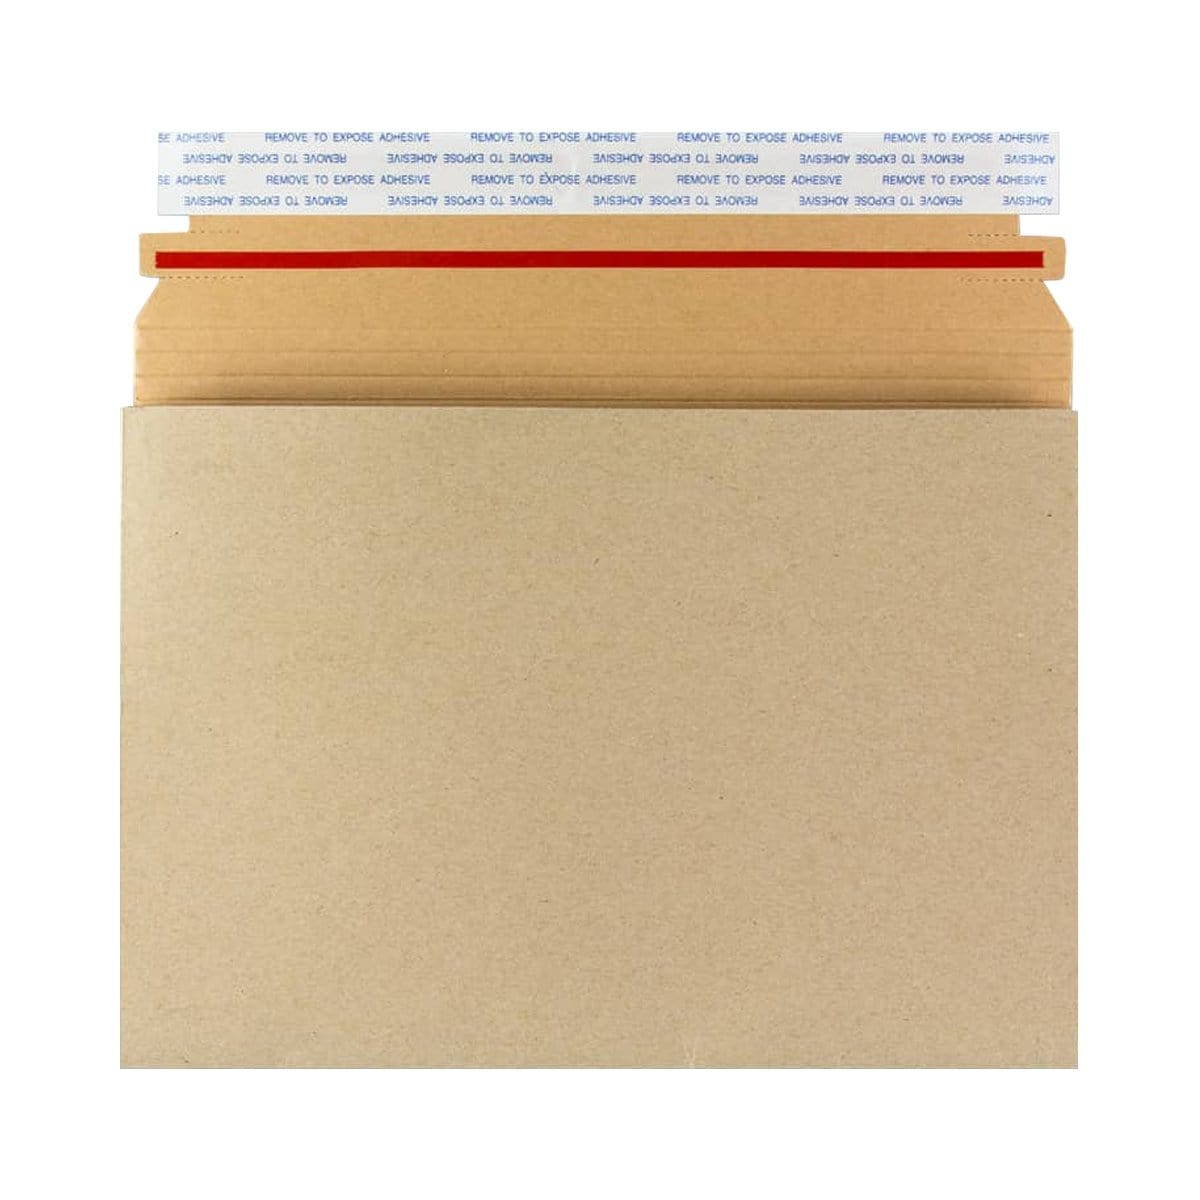 products/c5-gusset-rigid-cardboard-envelopes.jpg